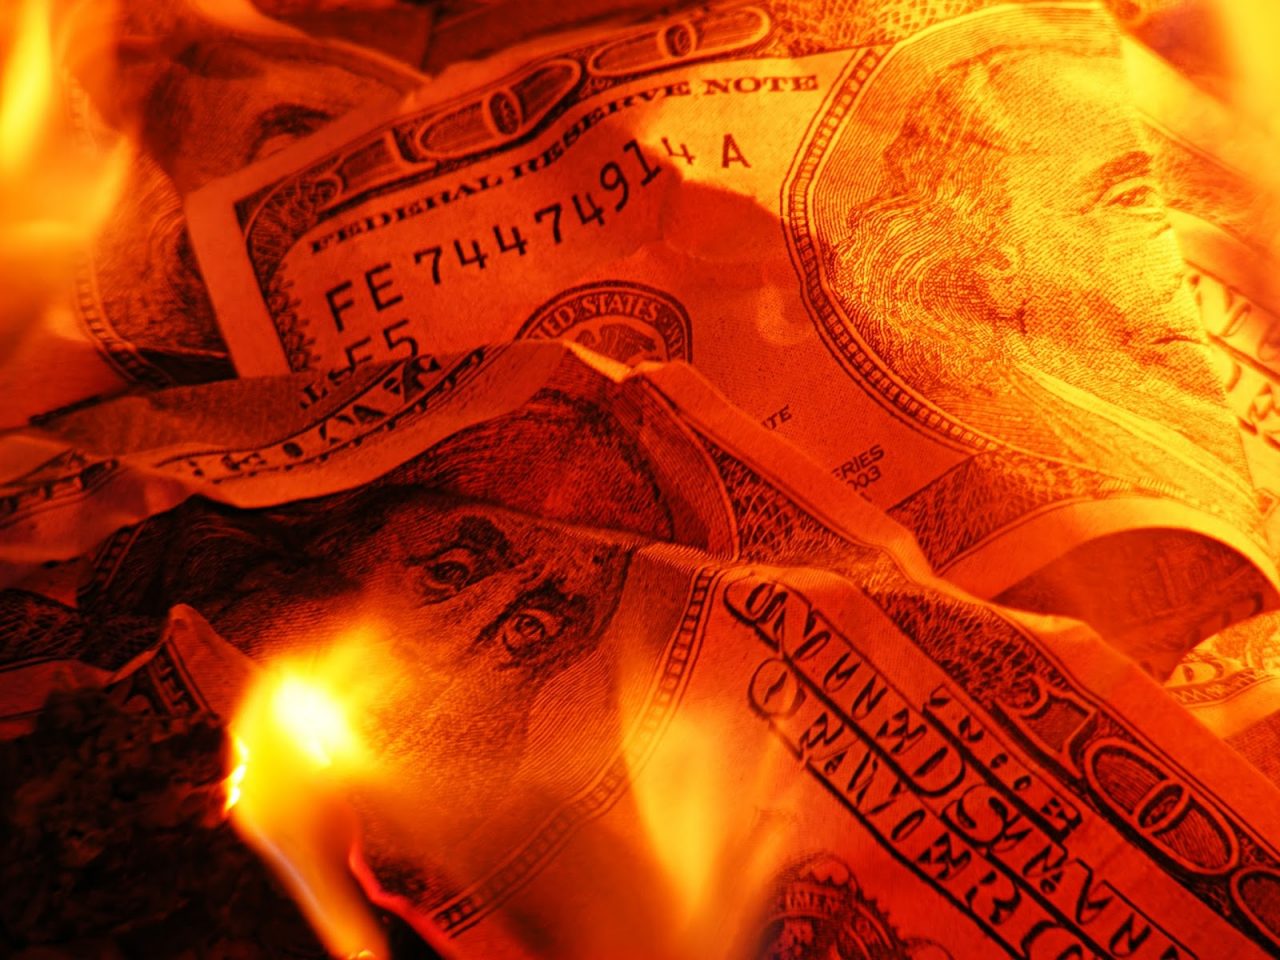 burning money economy financial crisis shutterstock com isak55 _107181203